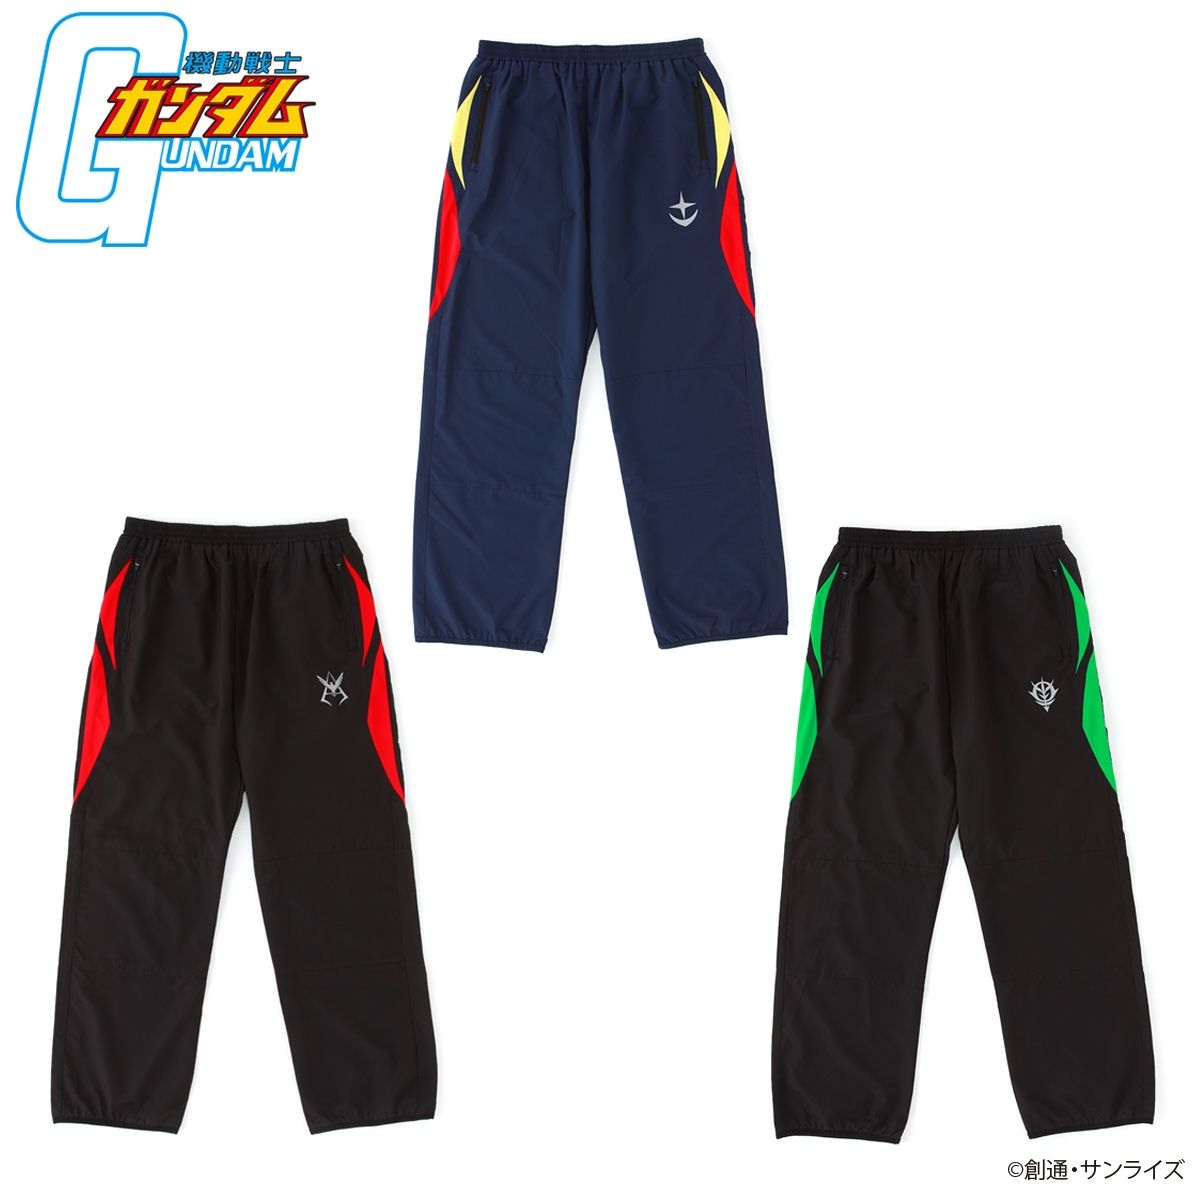 Mobile Suit Gundam Sportswear - Sweatpants